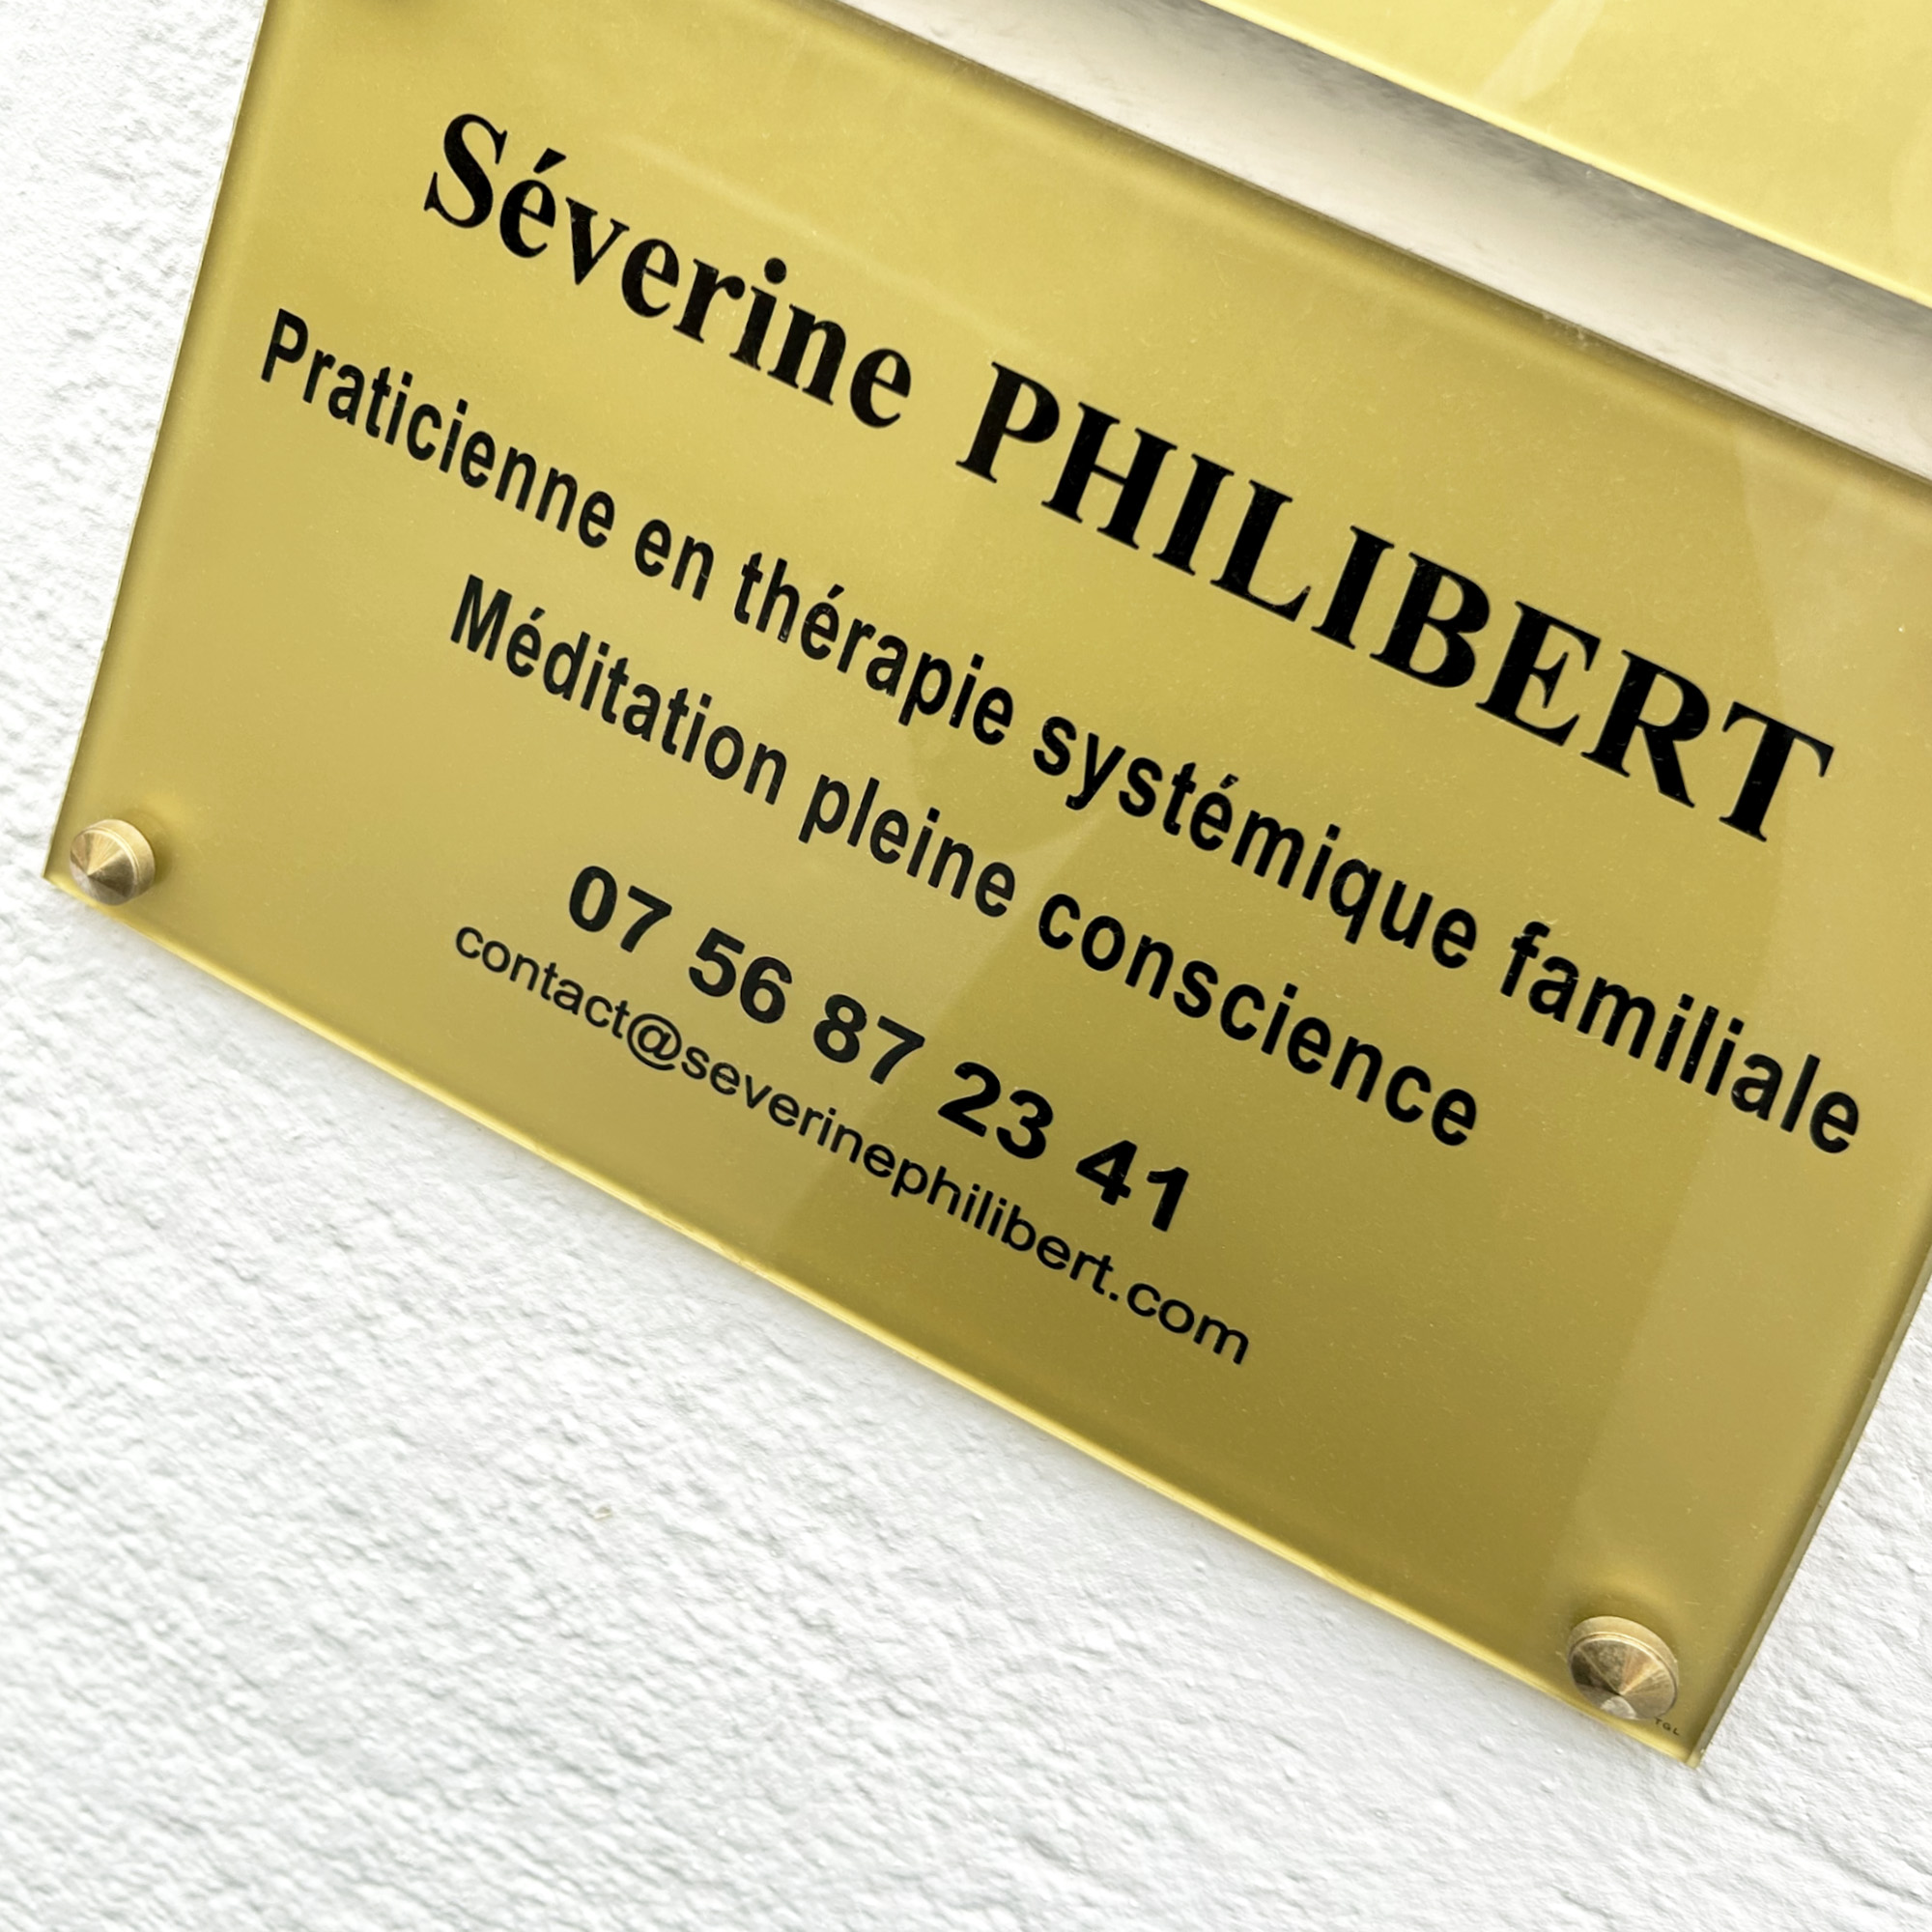 Séverine Philibert - thérapeute famille Lyon